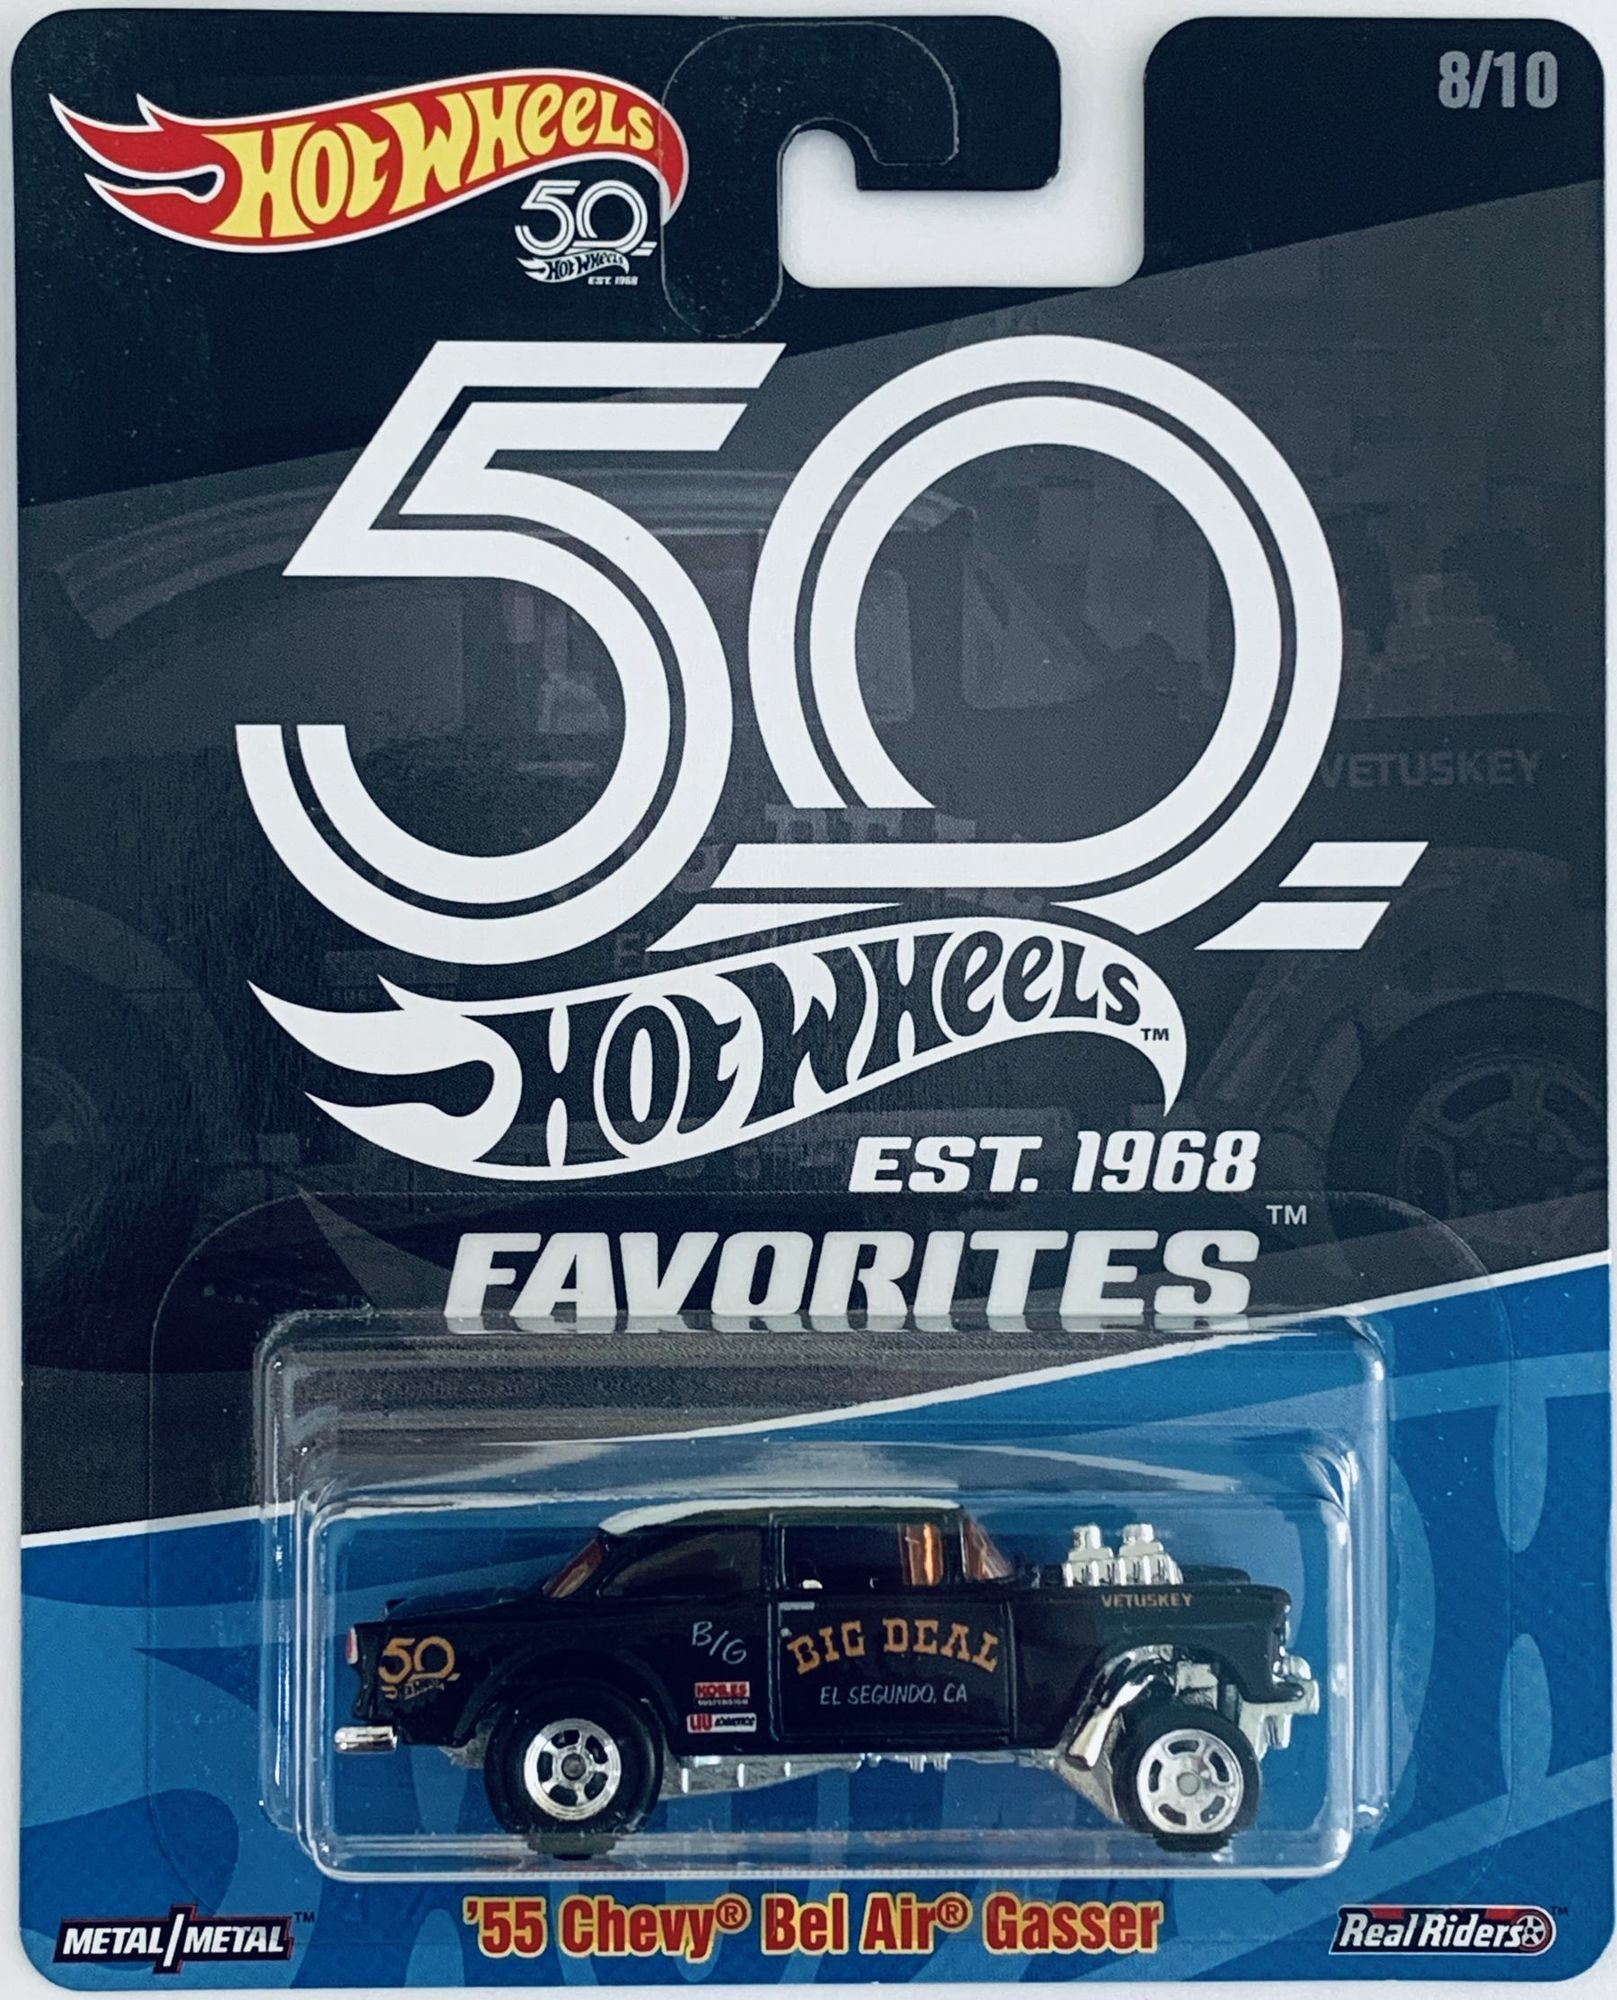 Hot Wheels 50th Favorites '55 Chevy Bel Air Gasser - Kroger Exclusive